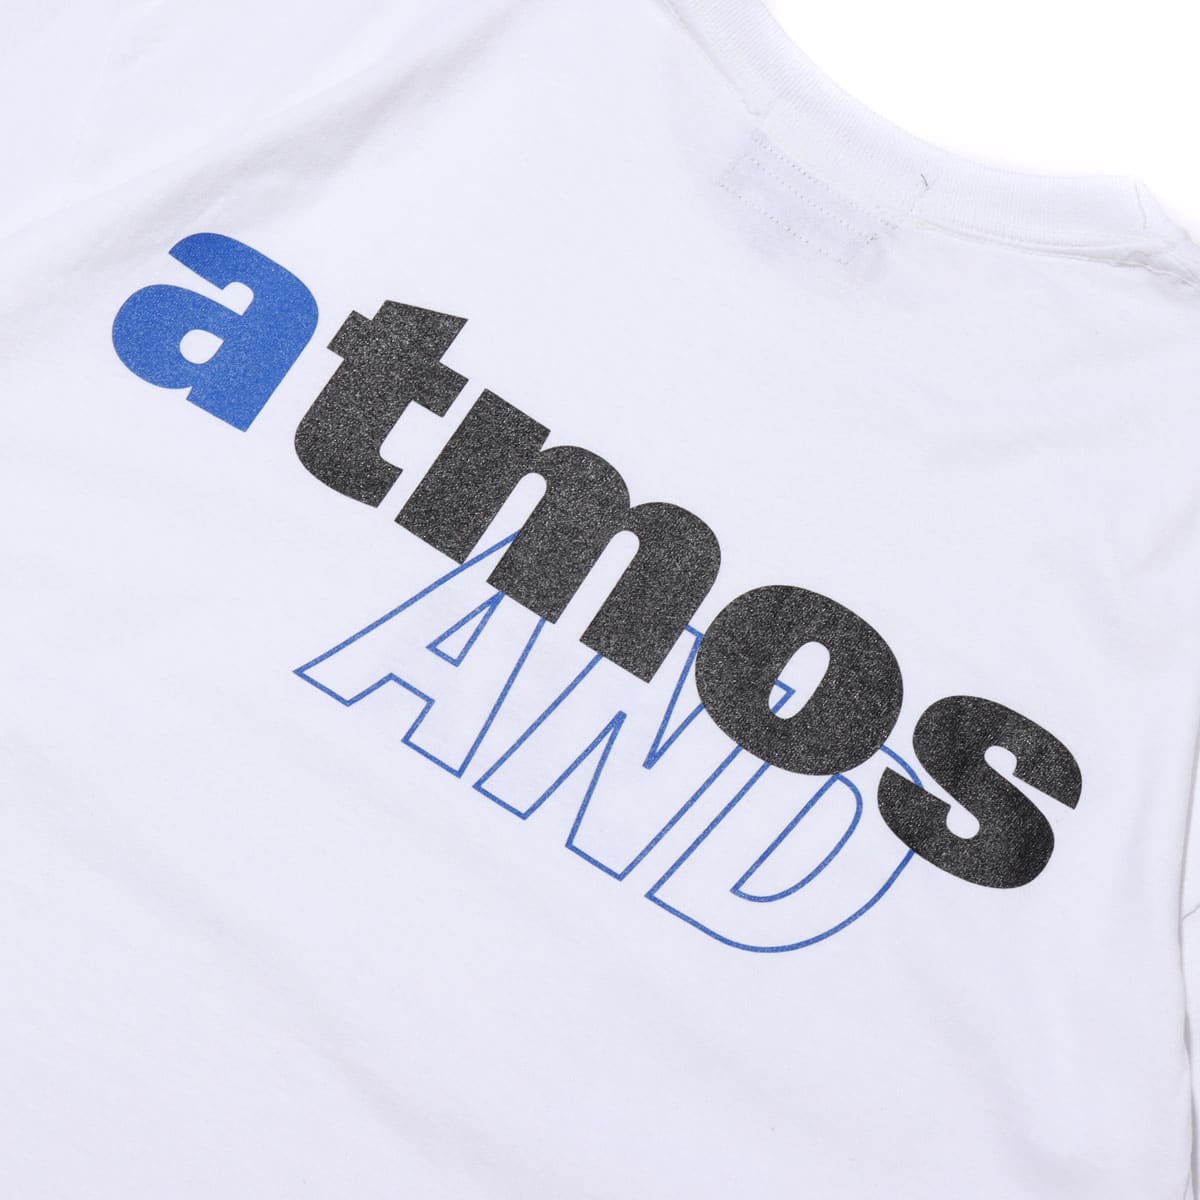 atmos x WIND AND SEA LOGO TEEXLカラー